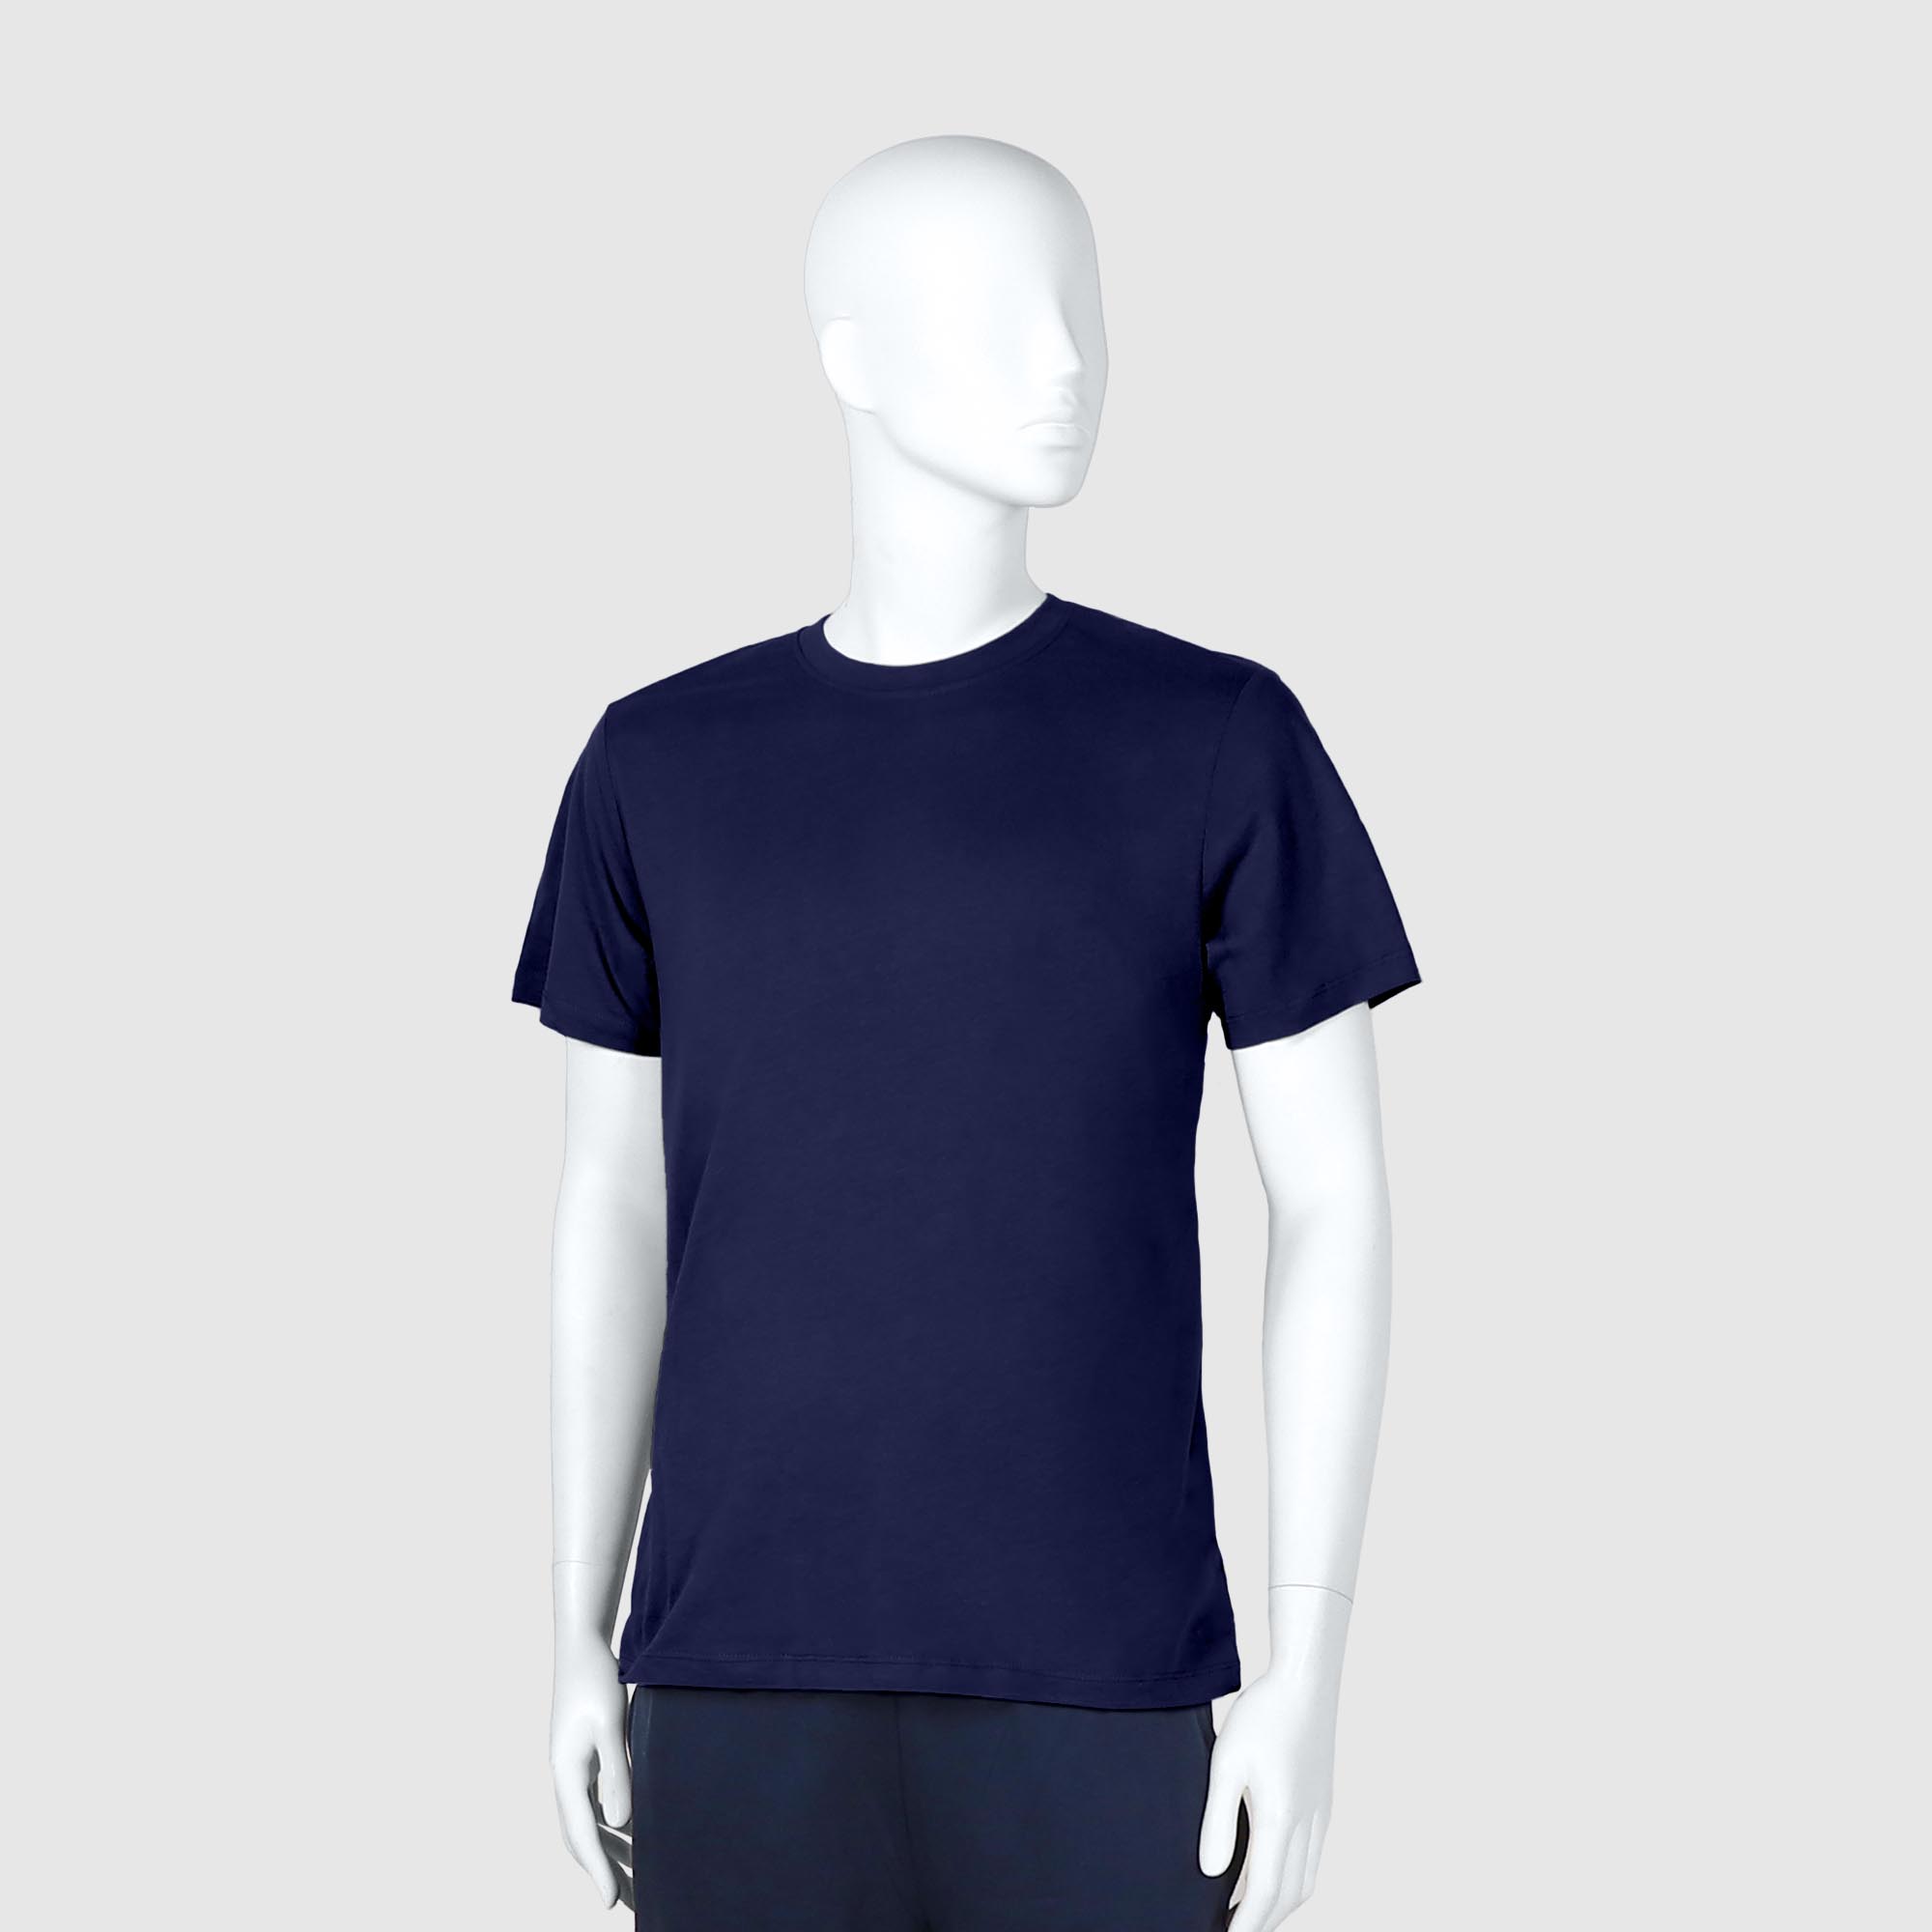 Мужская футболка Diva Teks синяя (DTD-05), цвет синий, размер 46-48